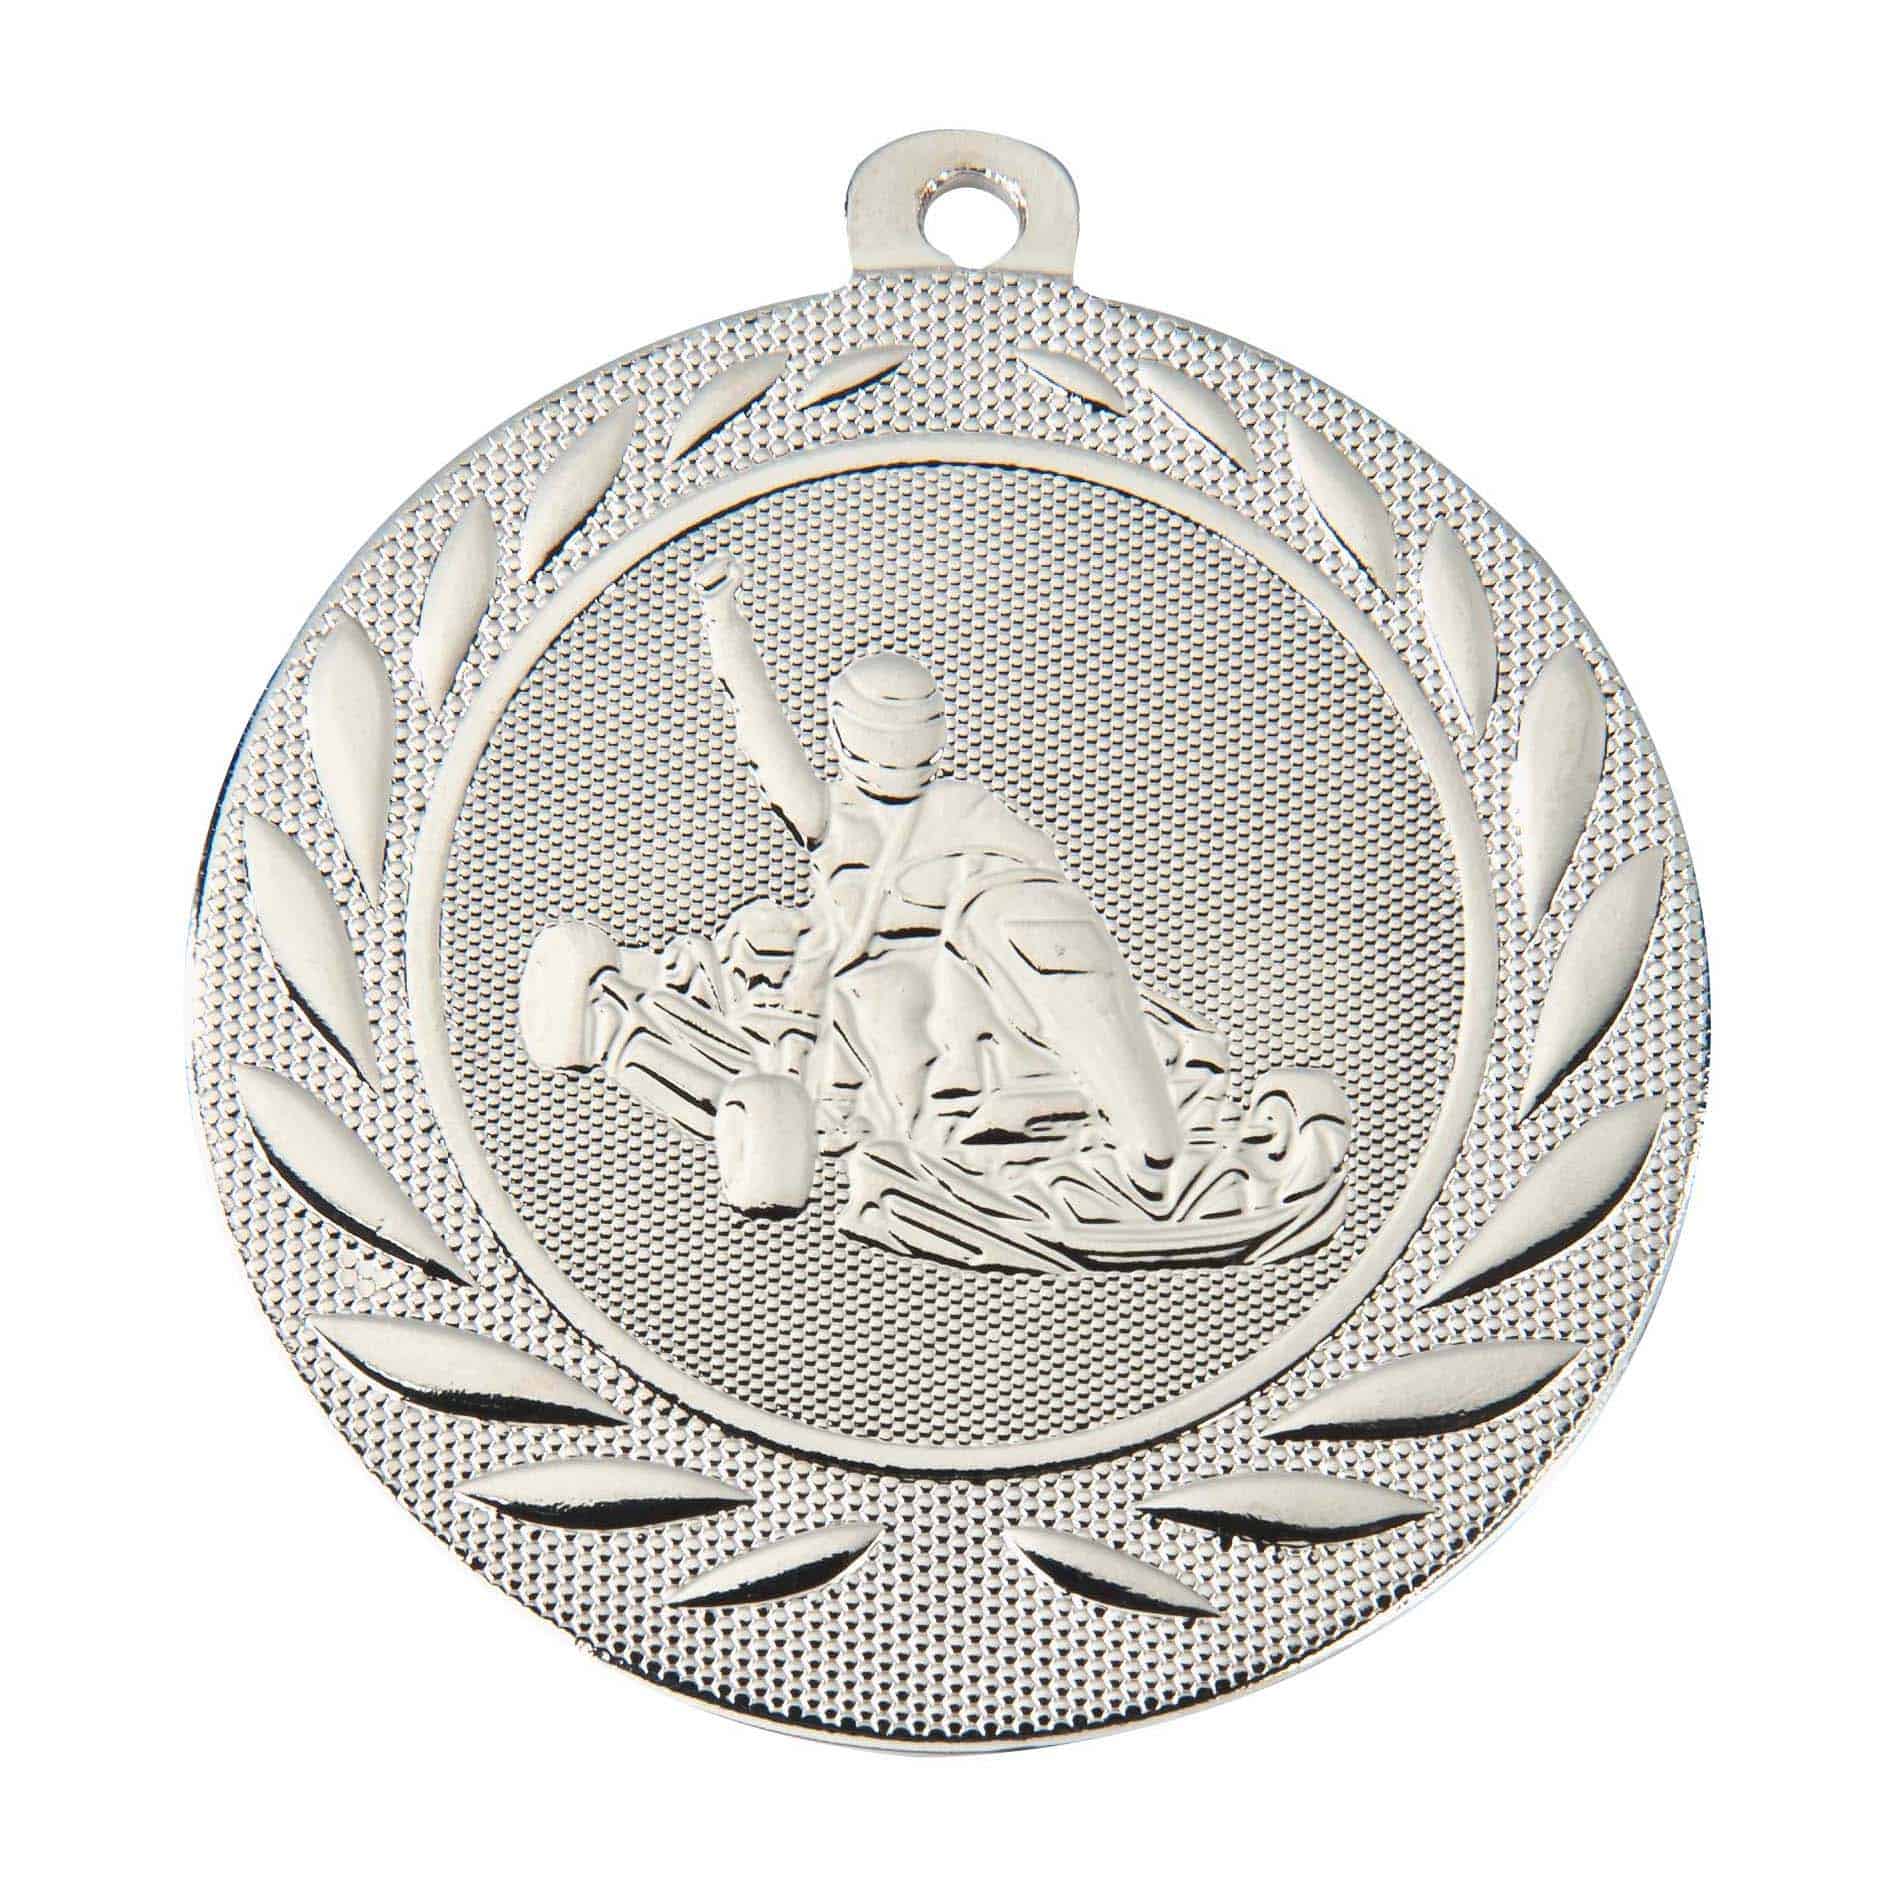 Medaille "Kartfahrer" Ø 50mm mit Band